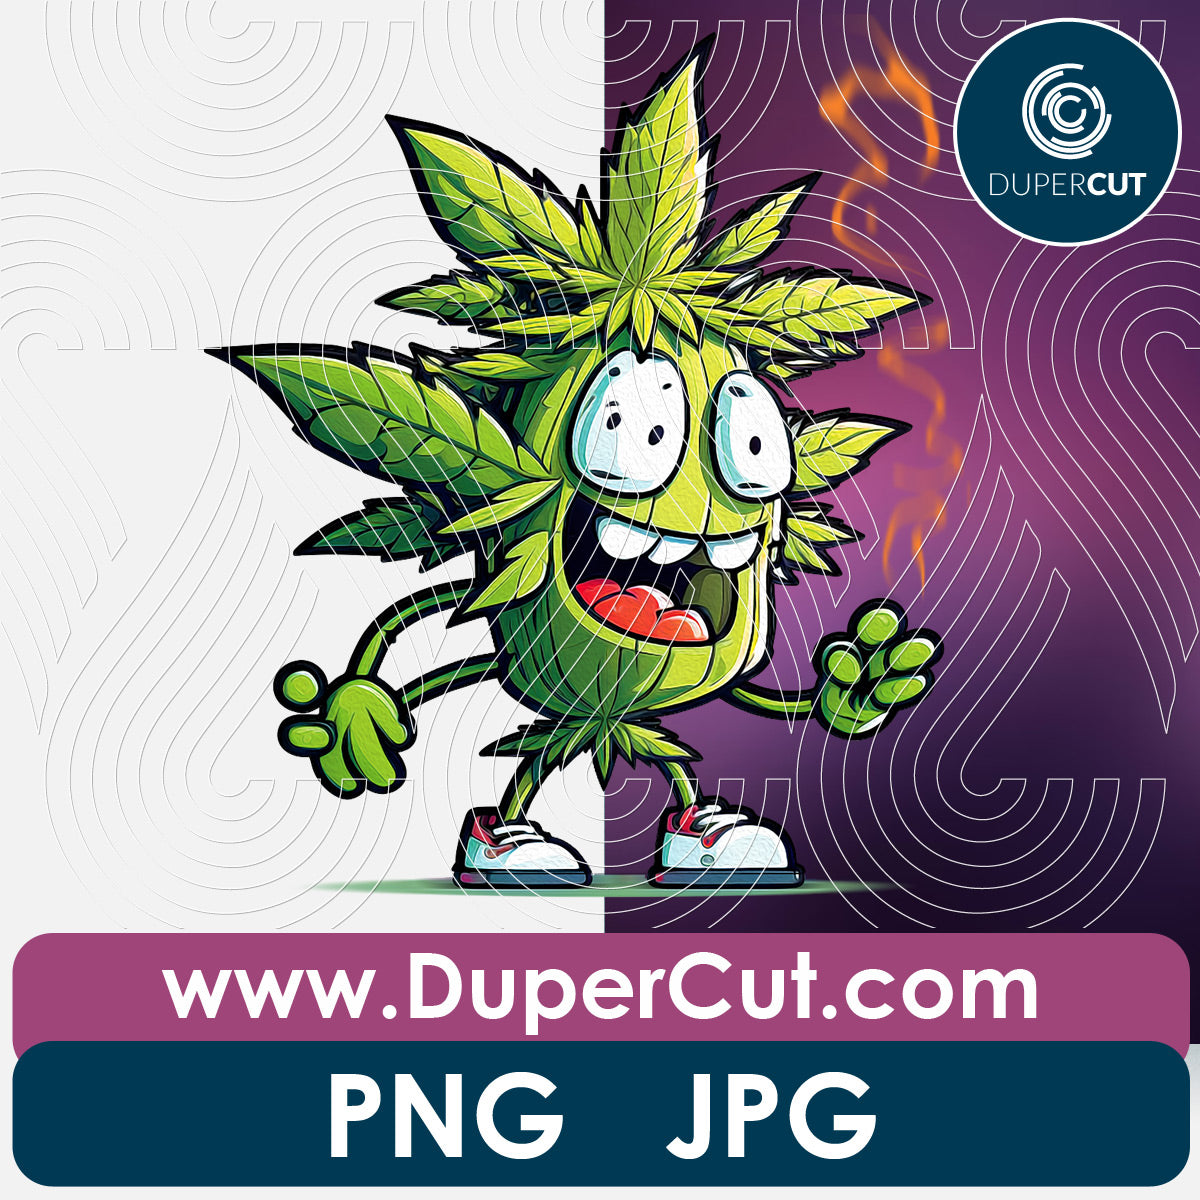 Funny Marijuana leaf character - cartoon style  - full color sublimation design, print on demand illustration, transparent background, high resolution, by DuperCut.com